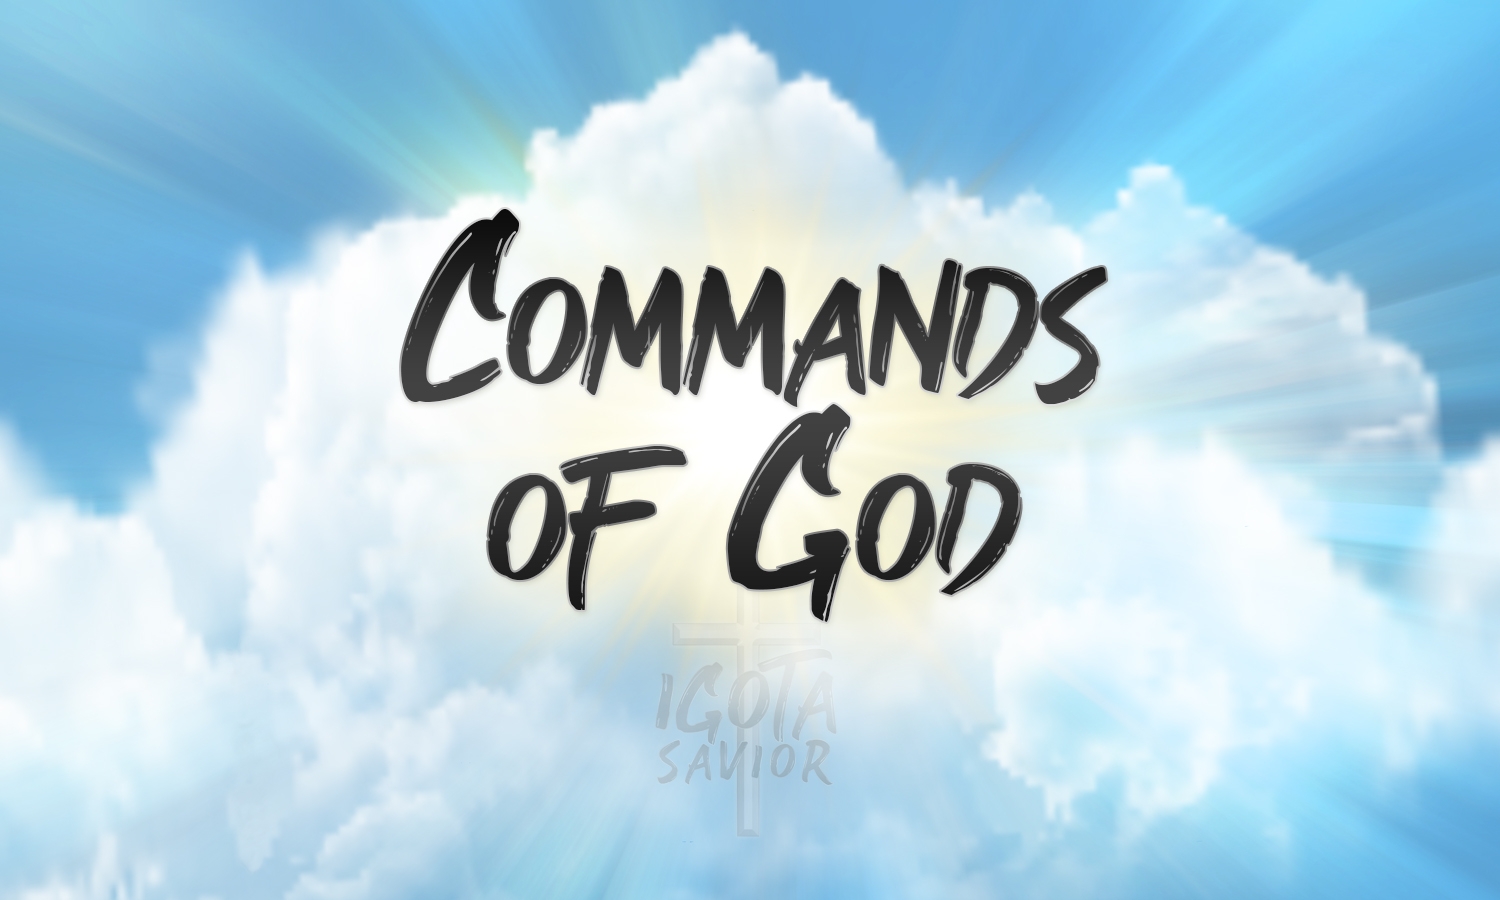 Commands of God